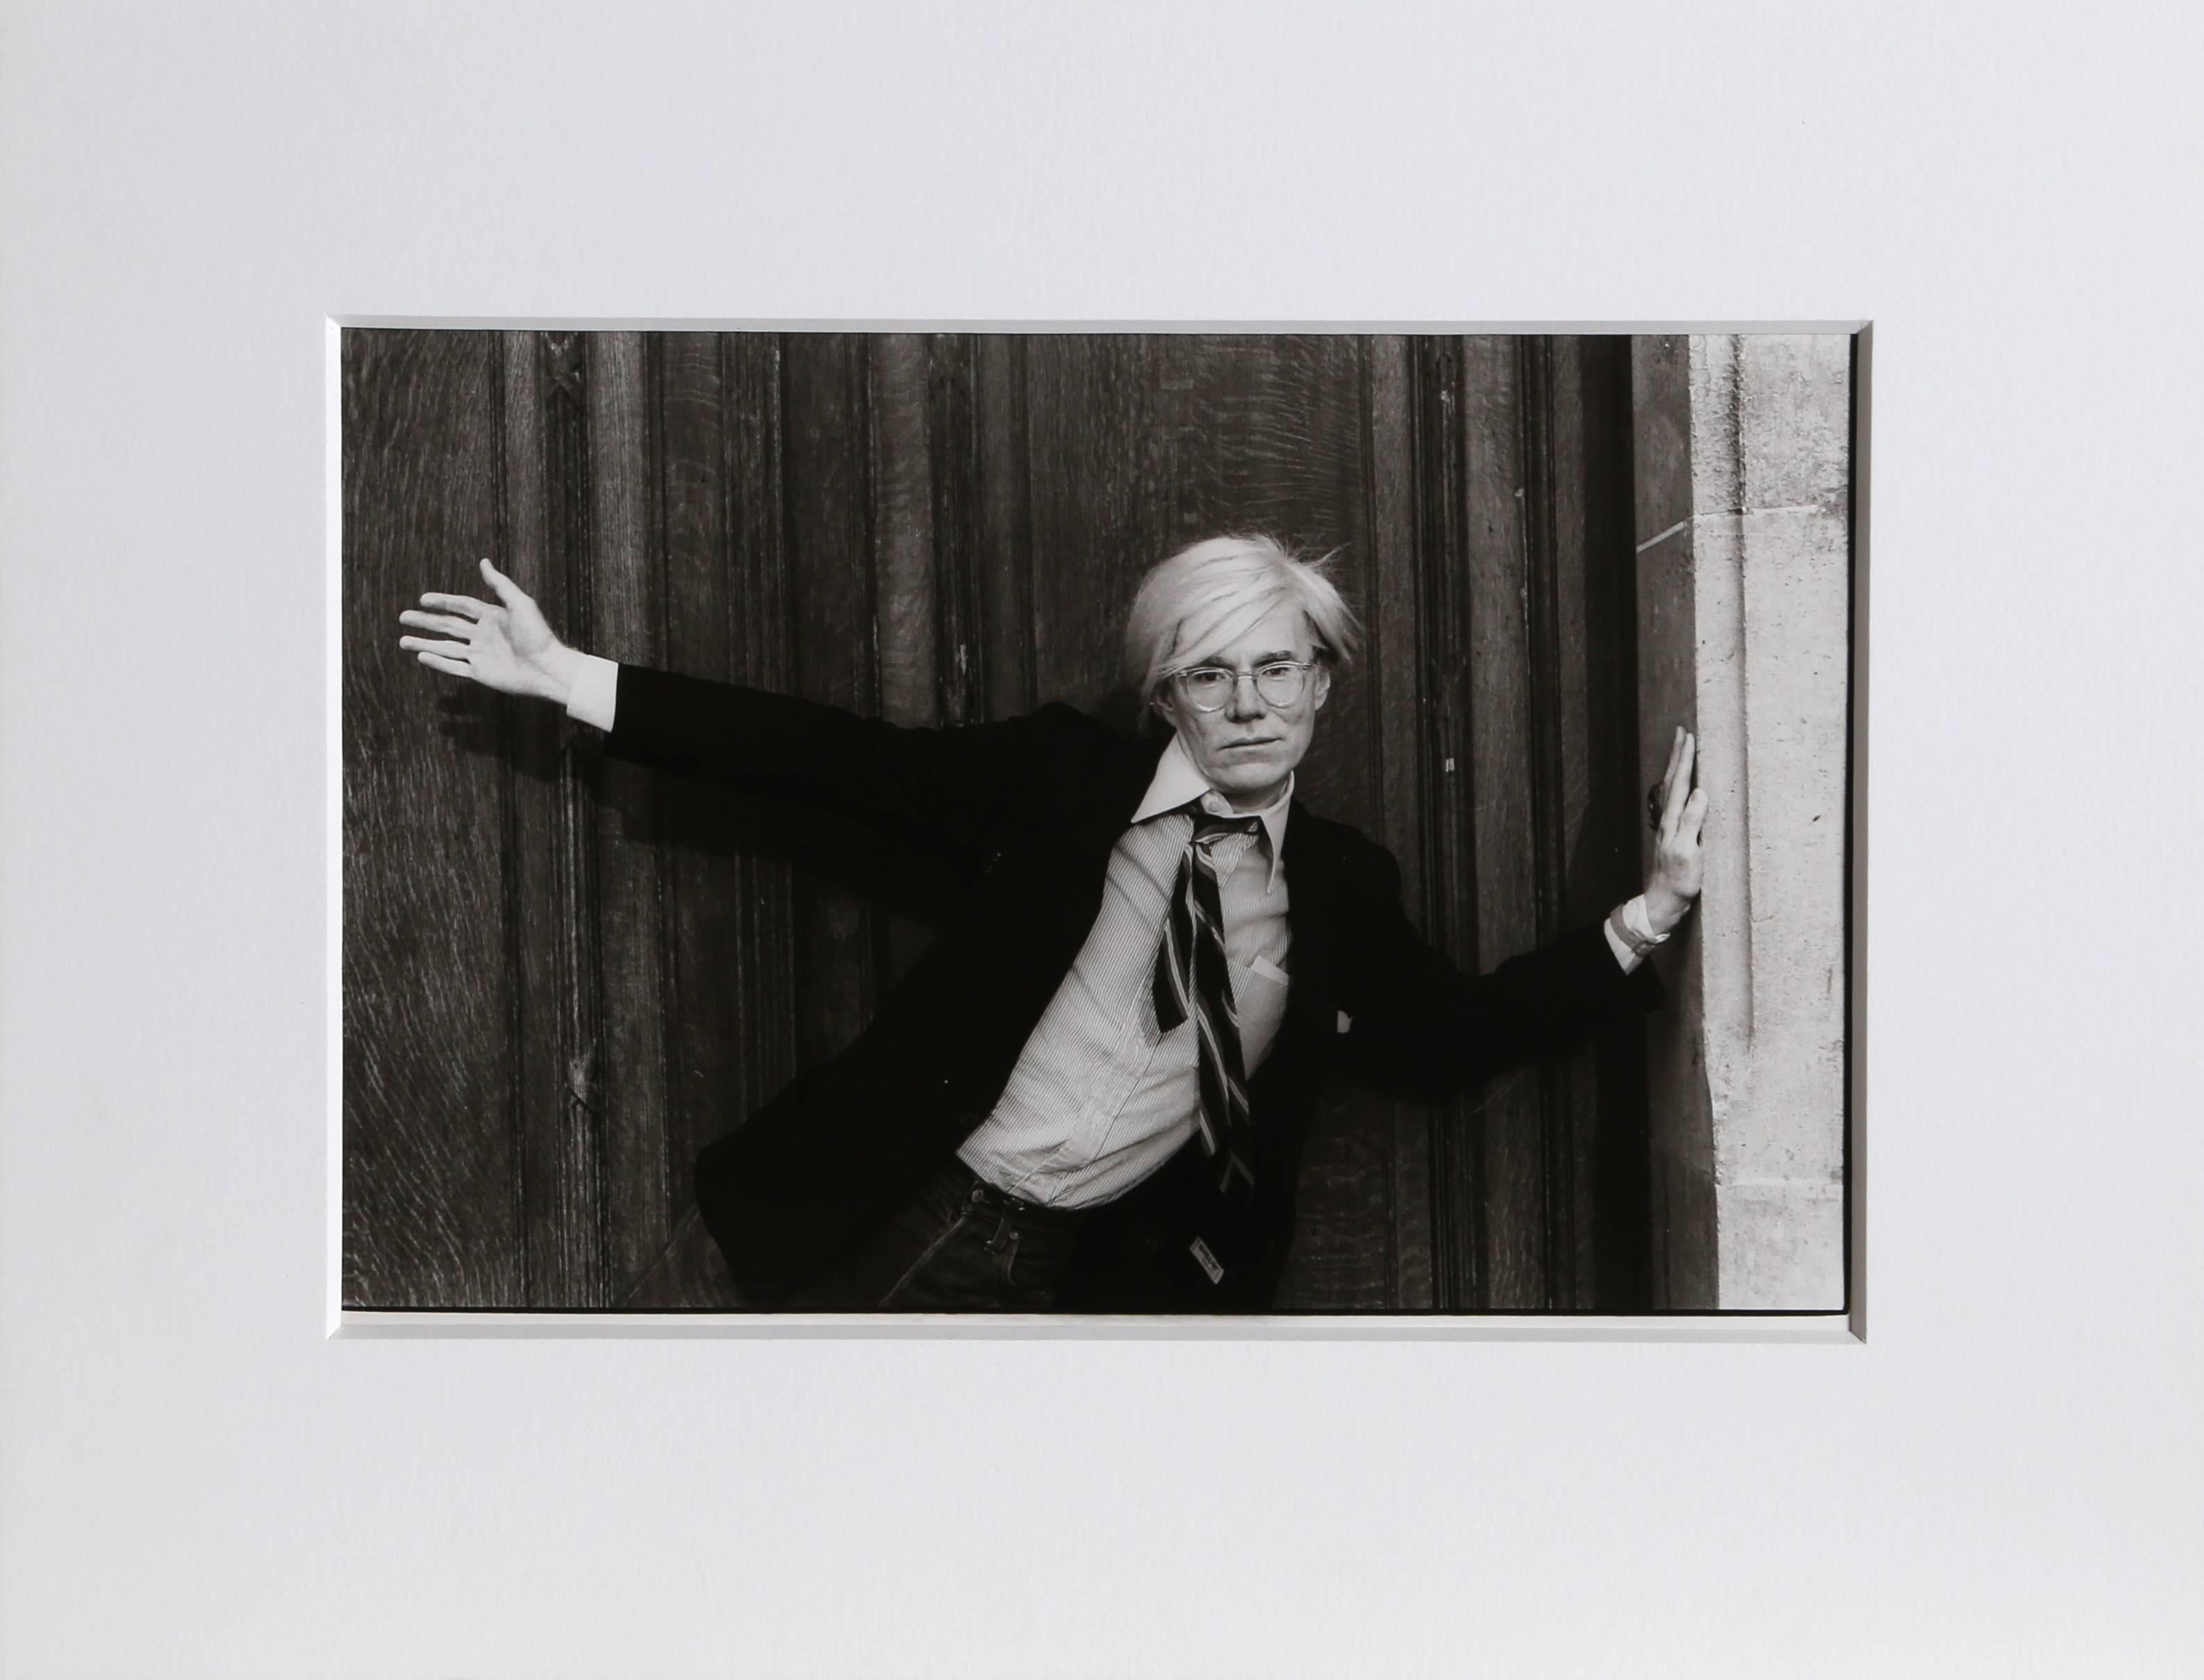 Andy Warhol in Paris